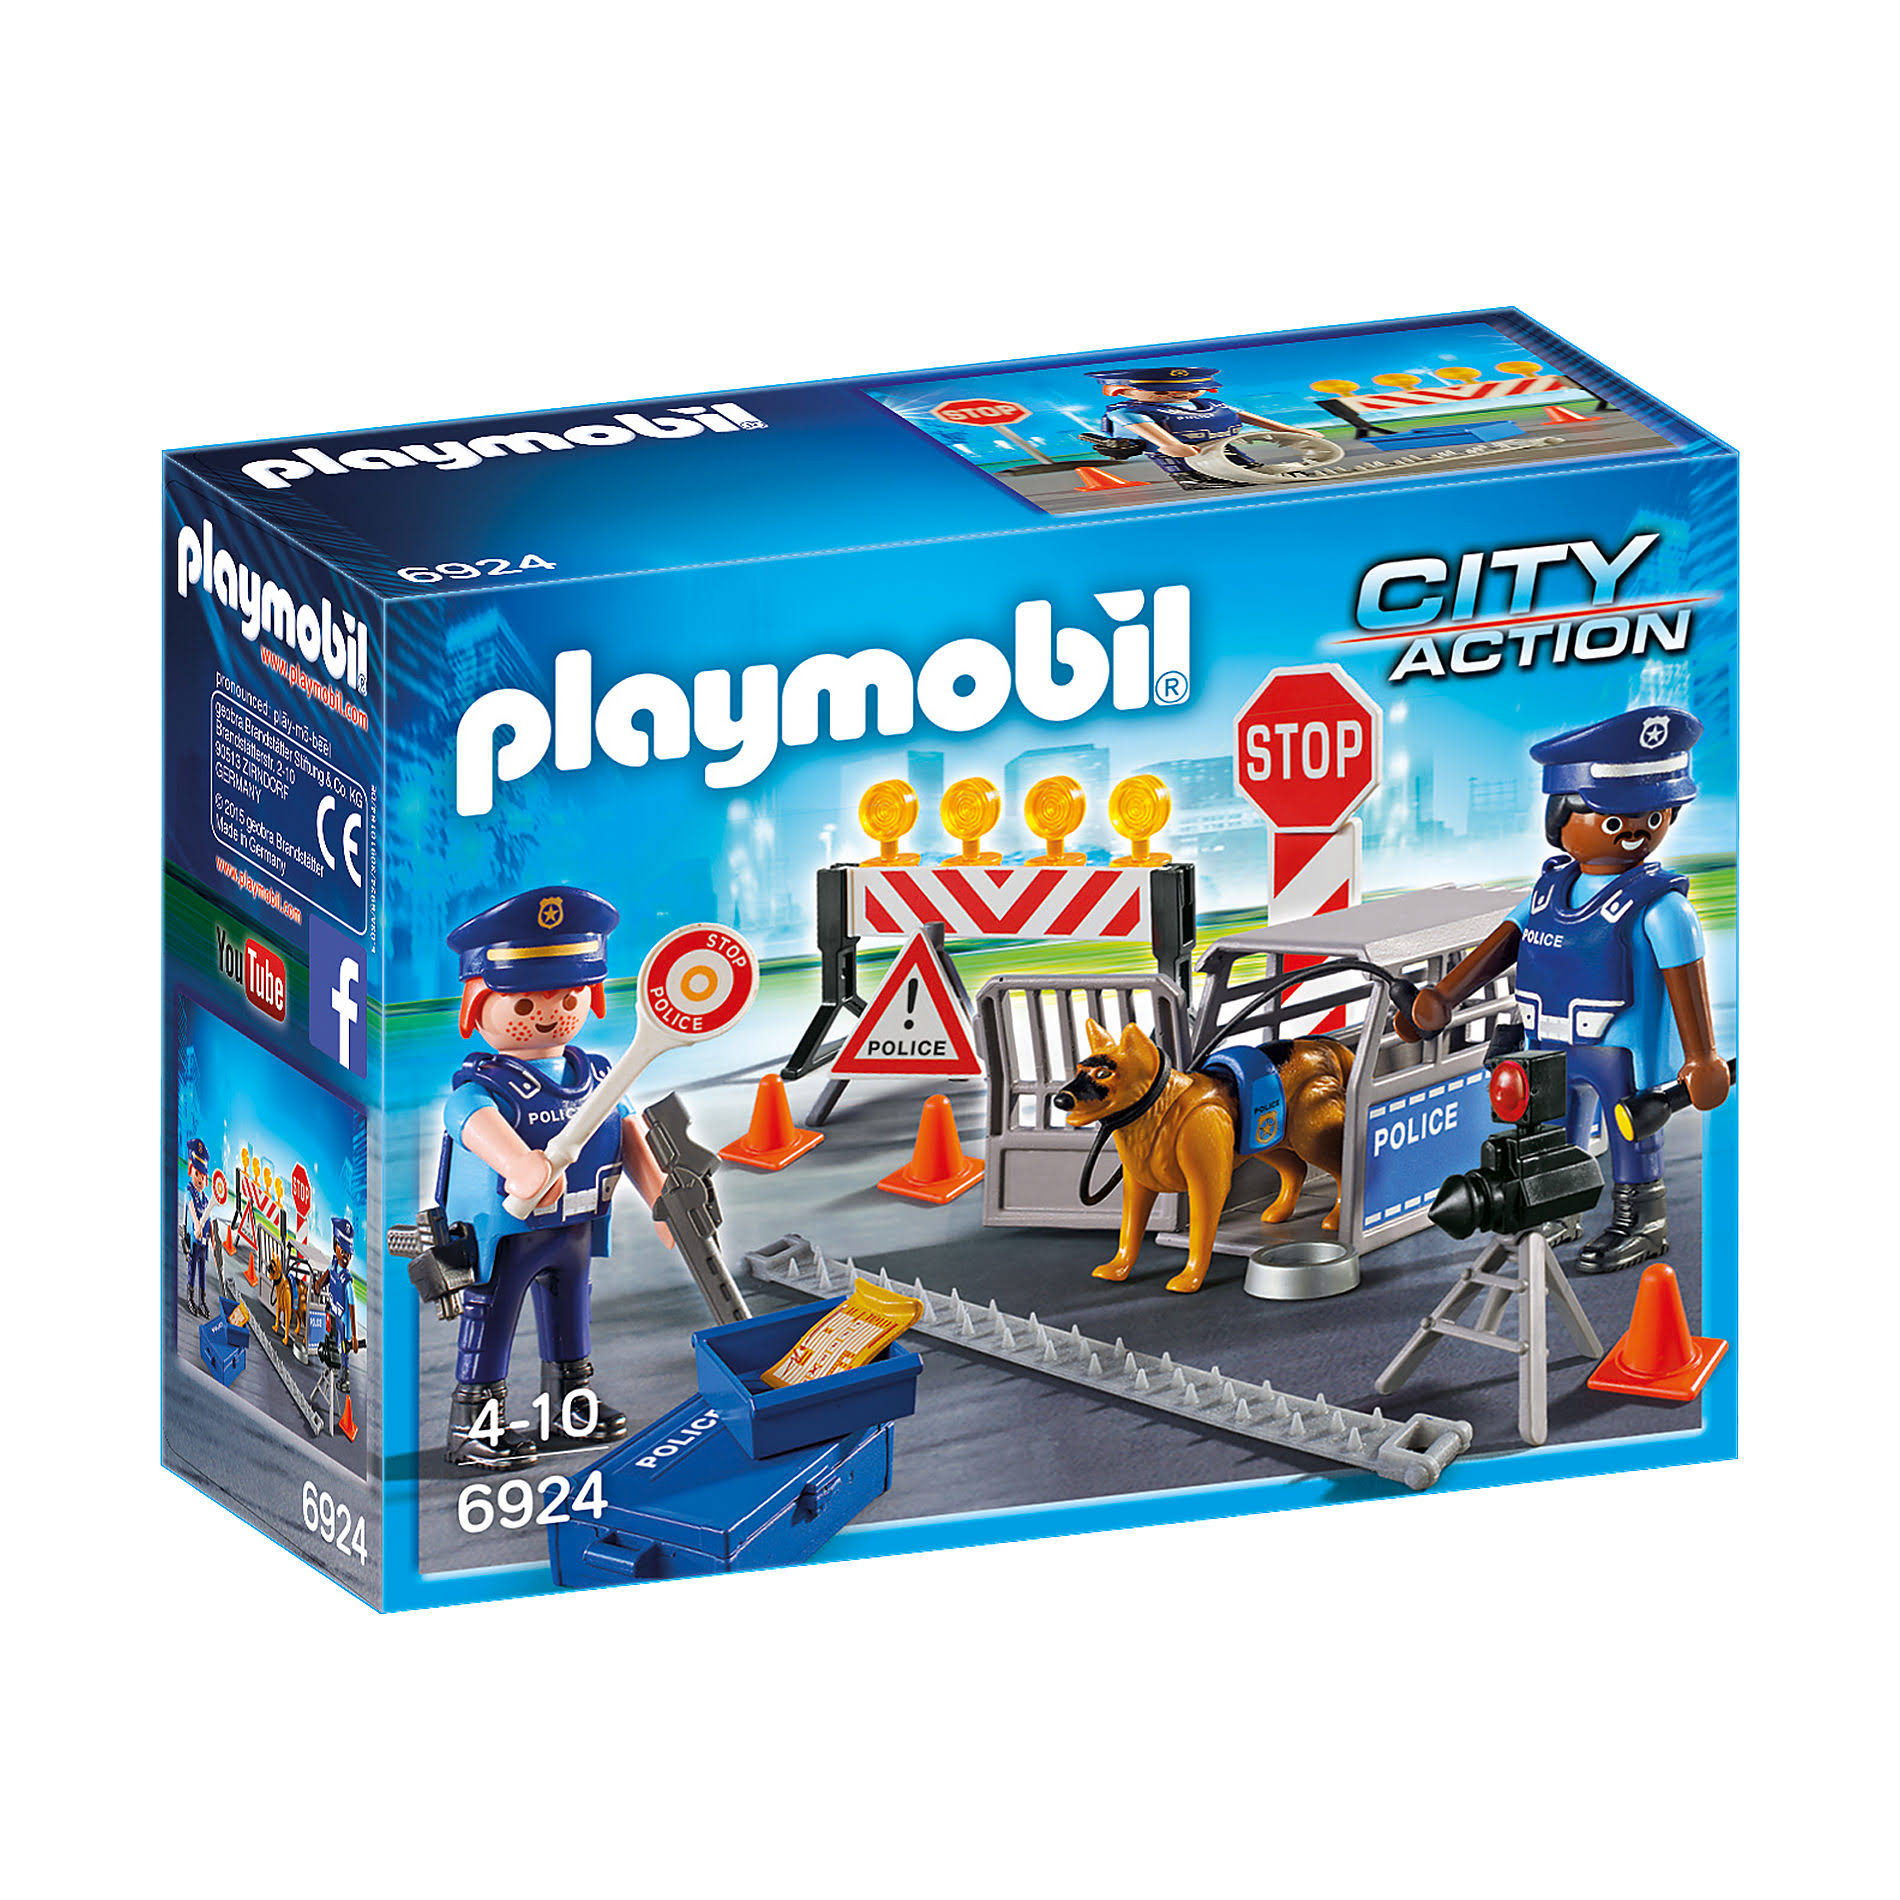 Playmobil 6924 City Action Police Roadblock Set - 20pcs